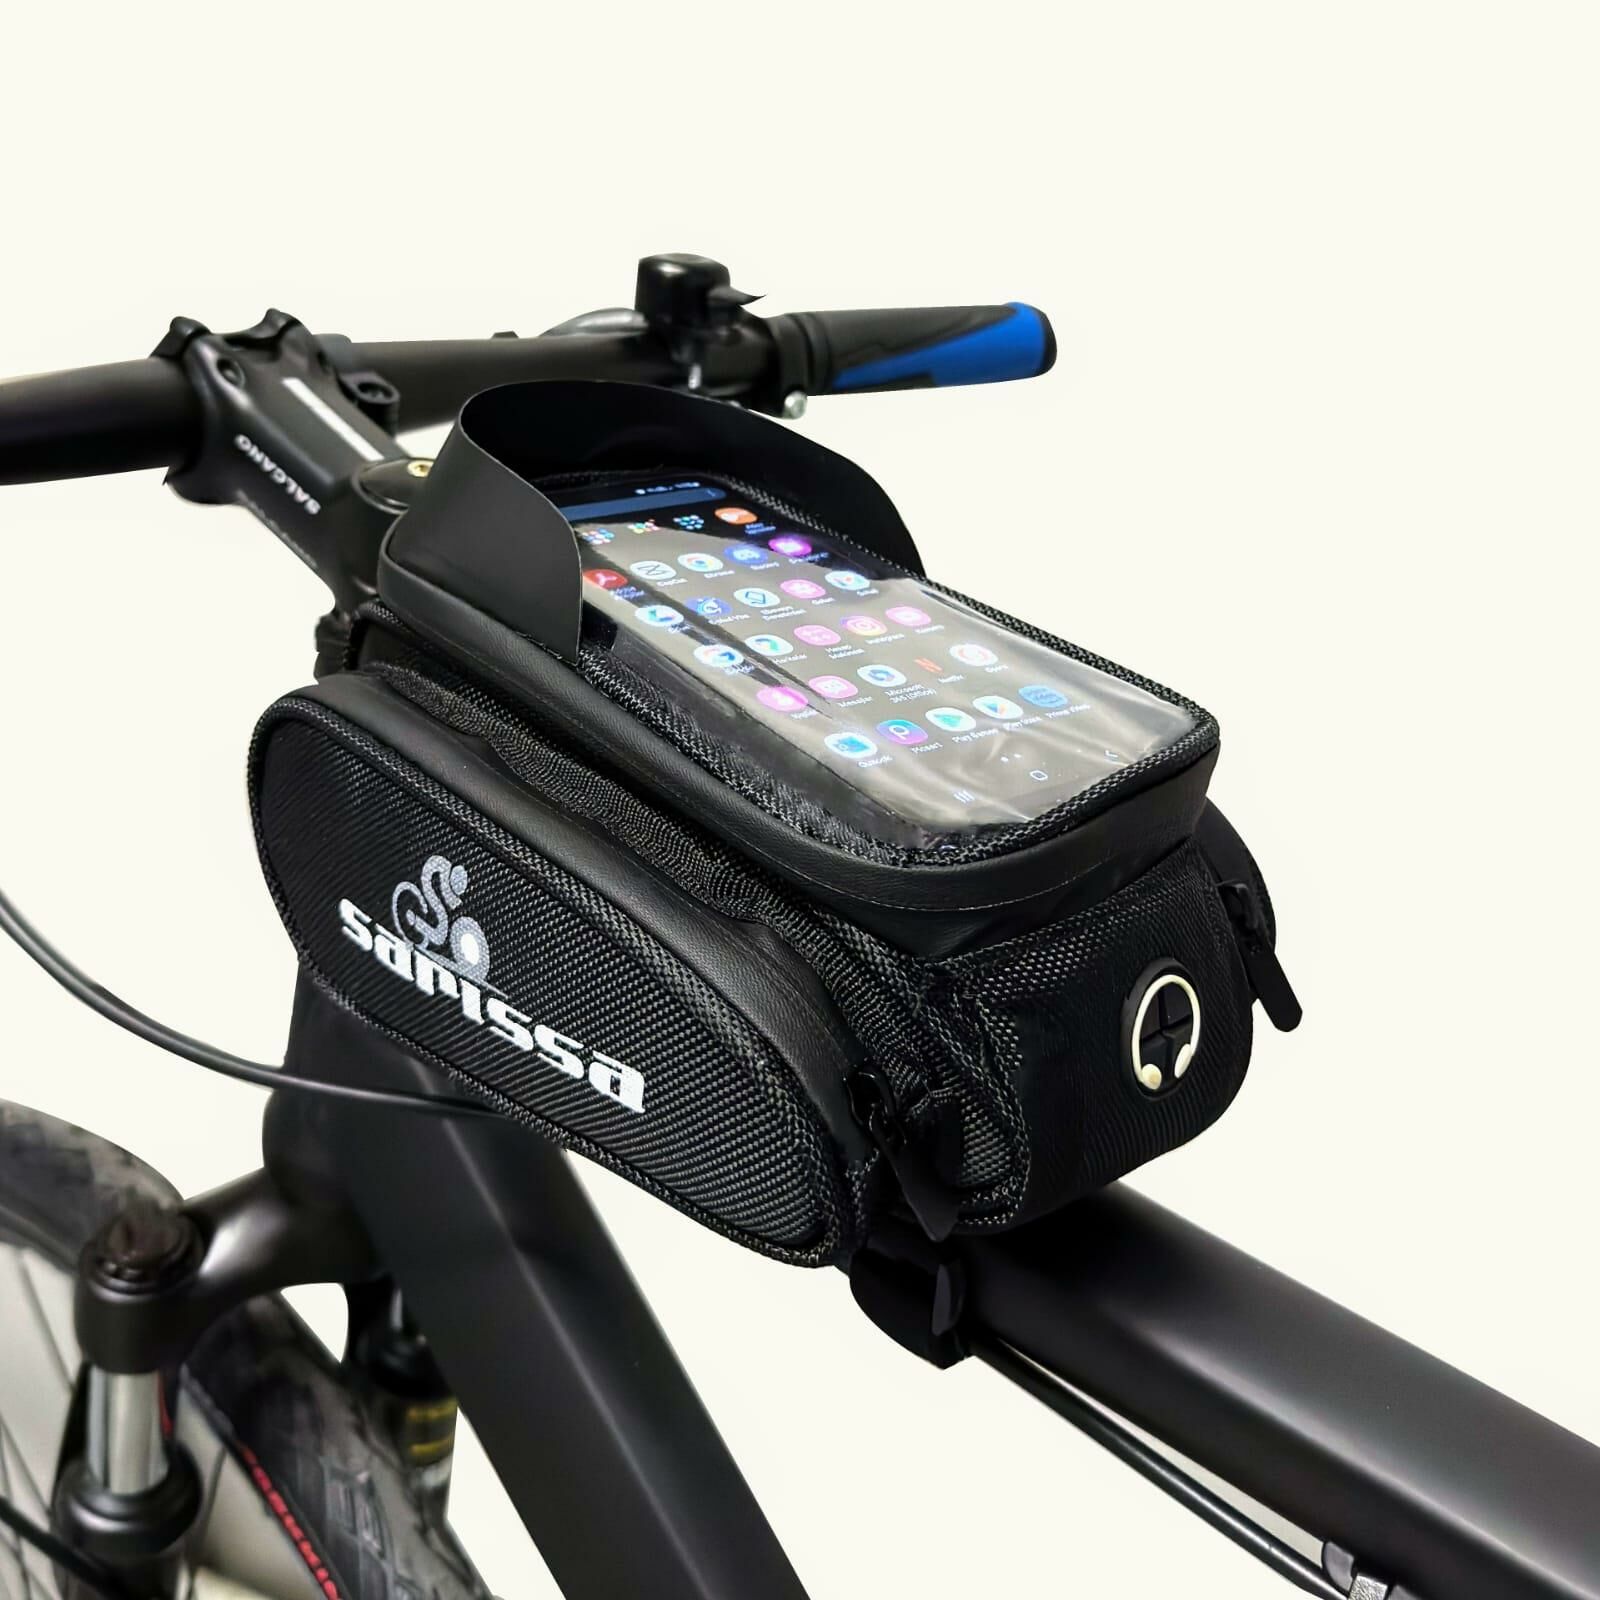 Sarissa 816 6 inç Su Geçirmez Dokunmatik Ekran Bisiklet Kadro Üstü Çanta Gri